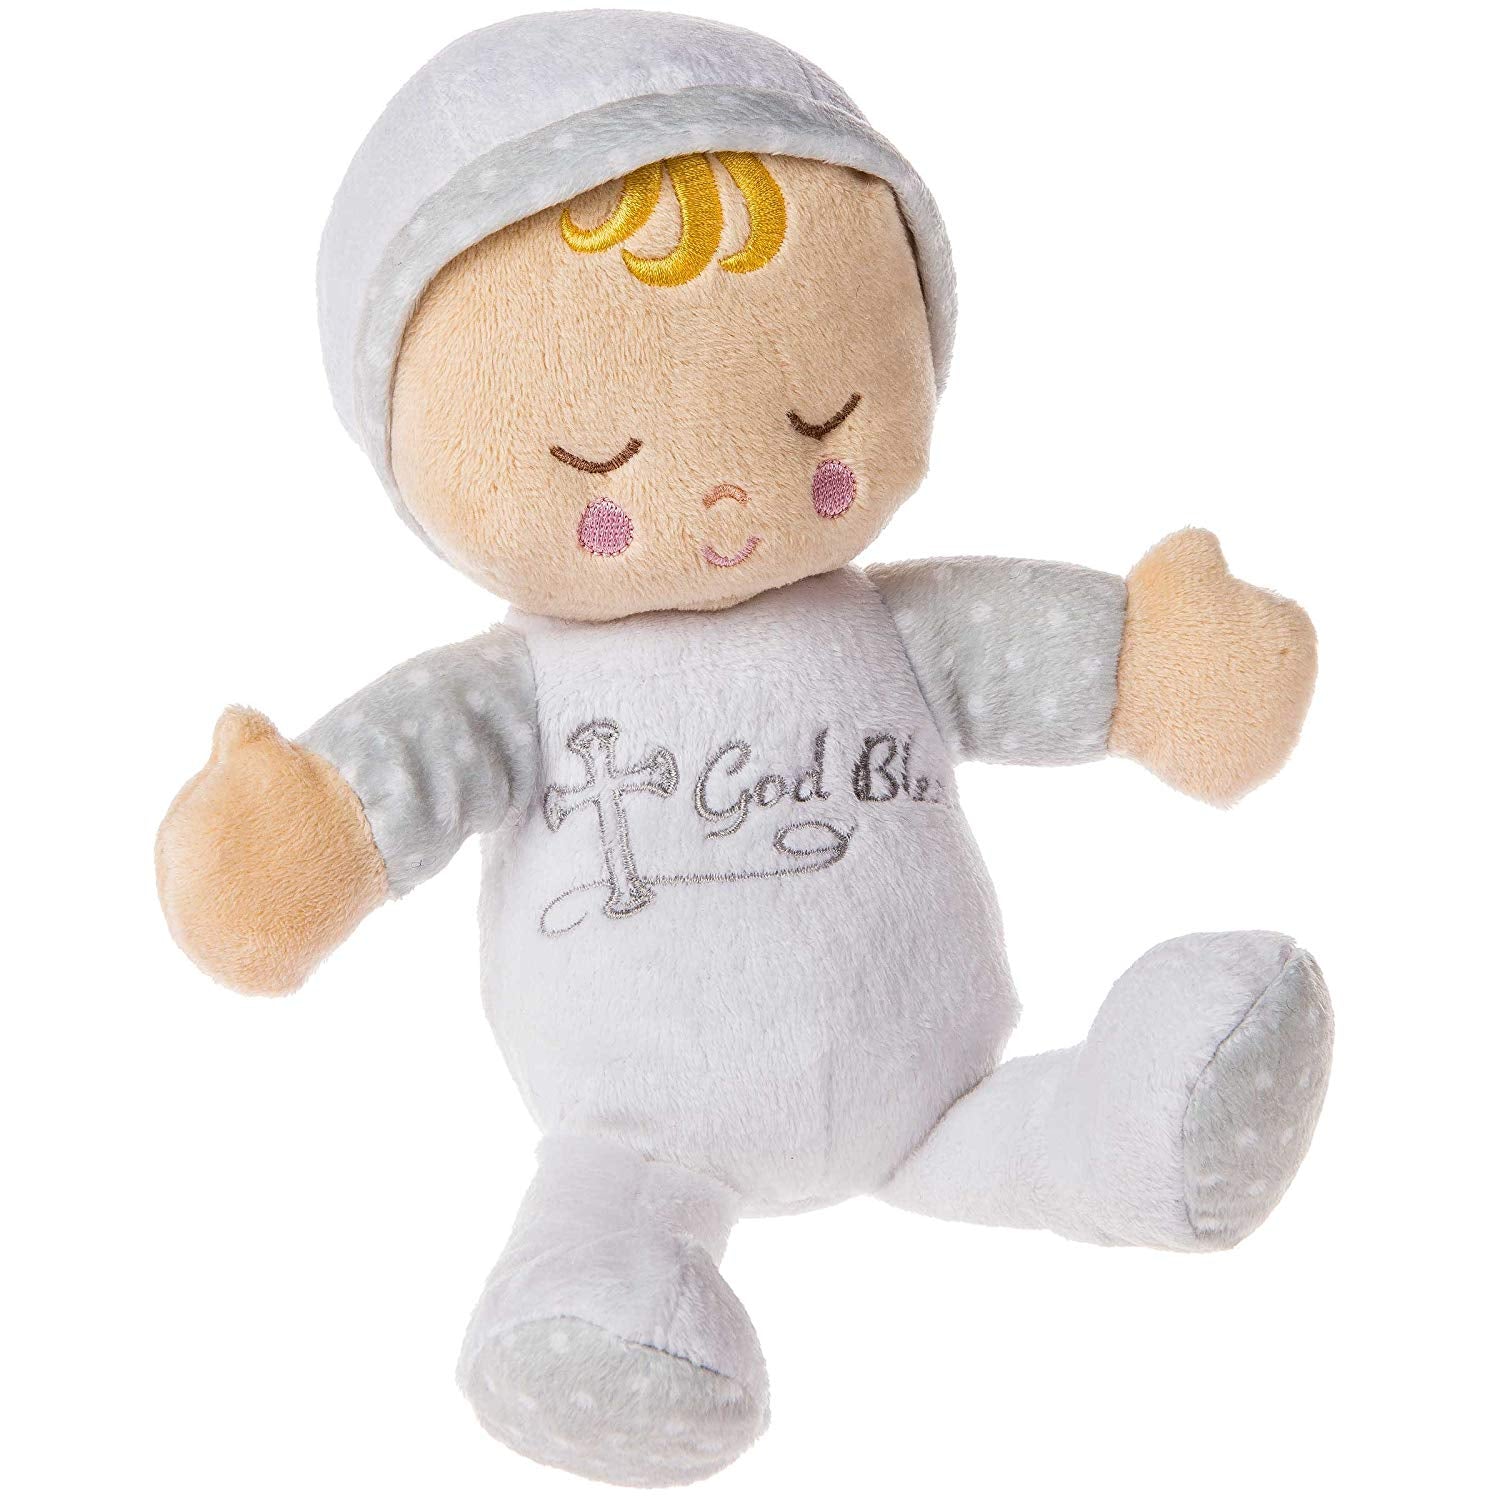 kidz-stuff-online - God Bless Baby Doll